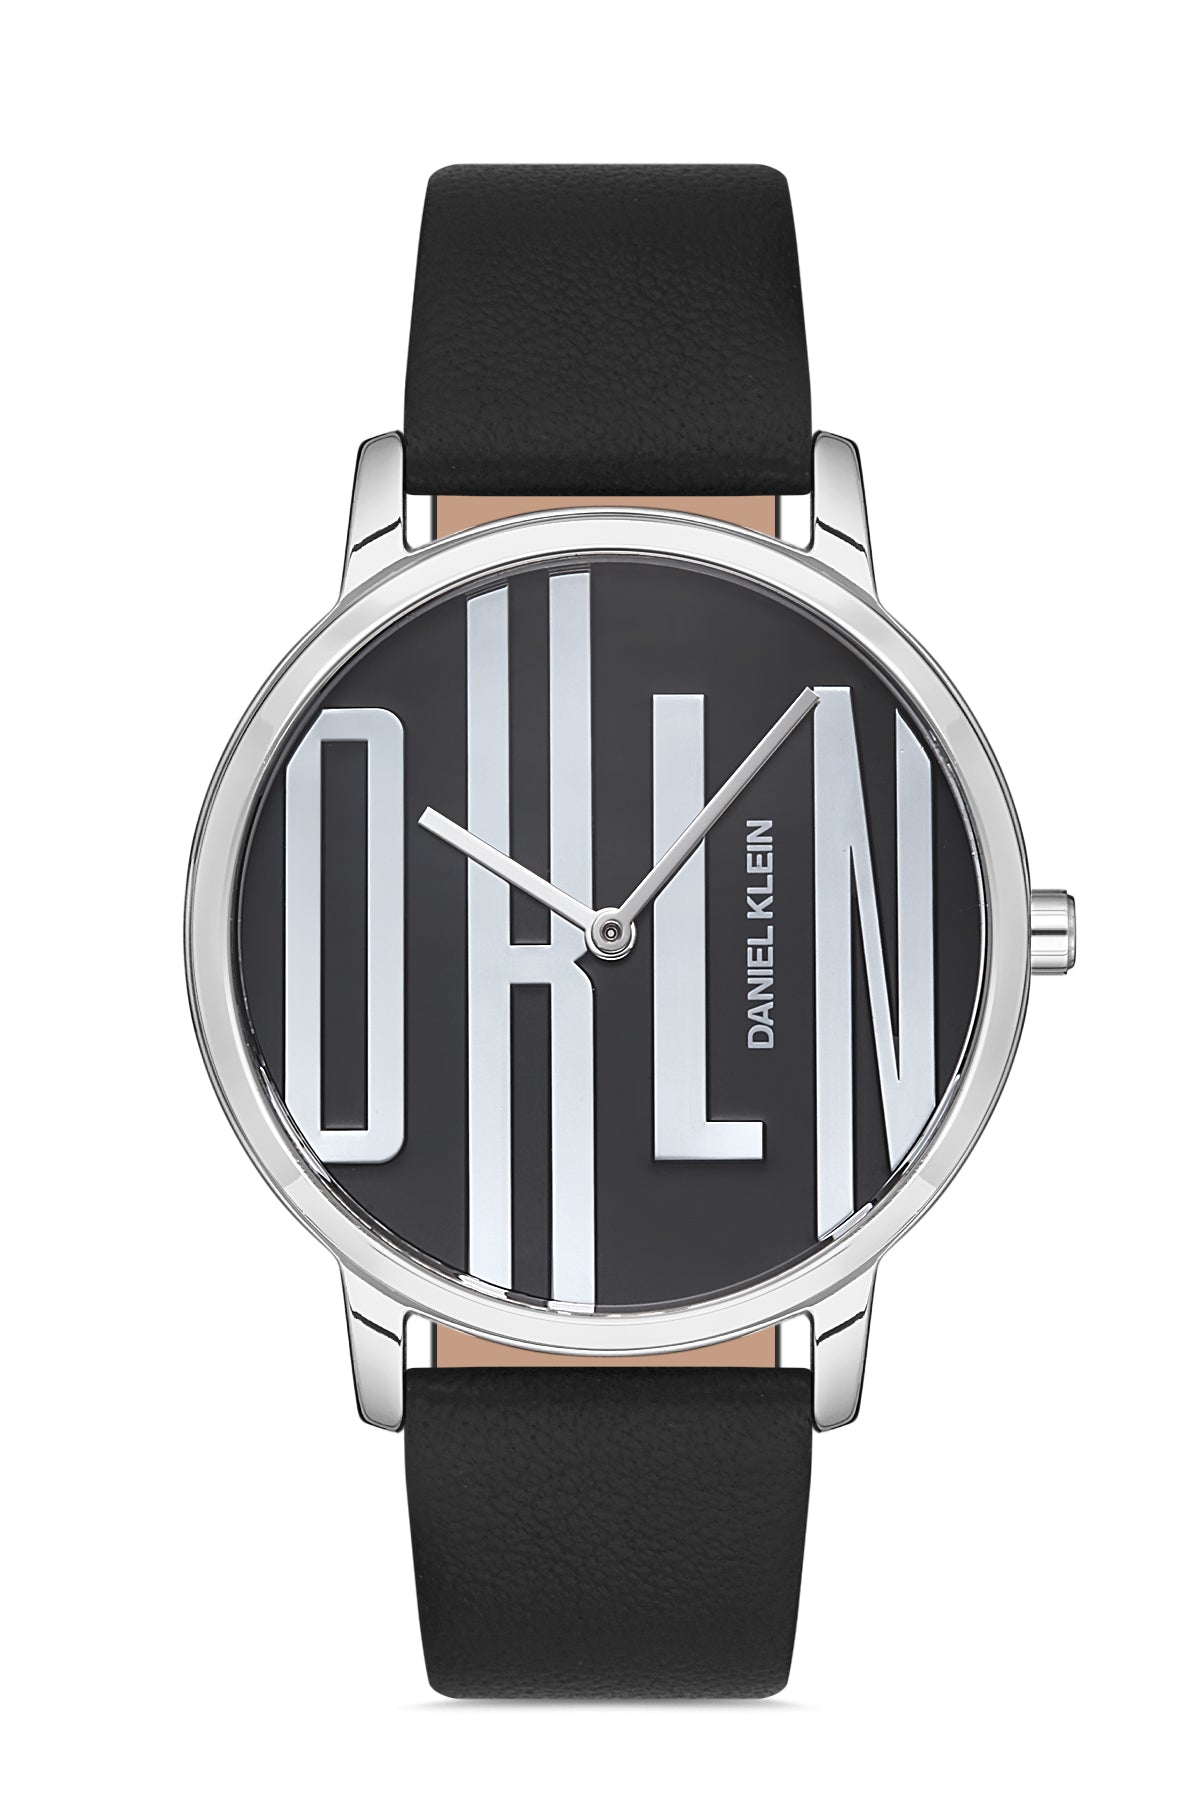 Gant Gents' Astoria Chronograph Watch W10151 OutdoorGB